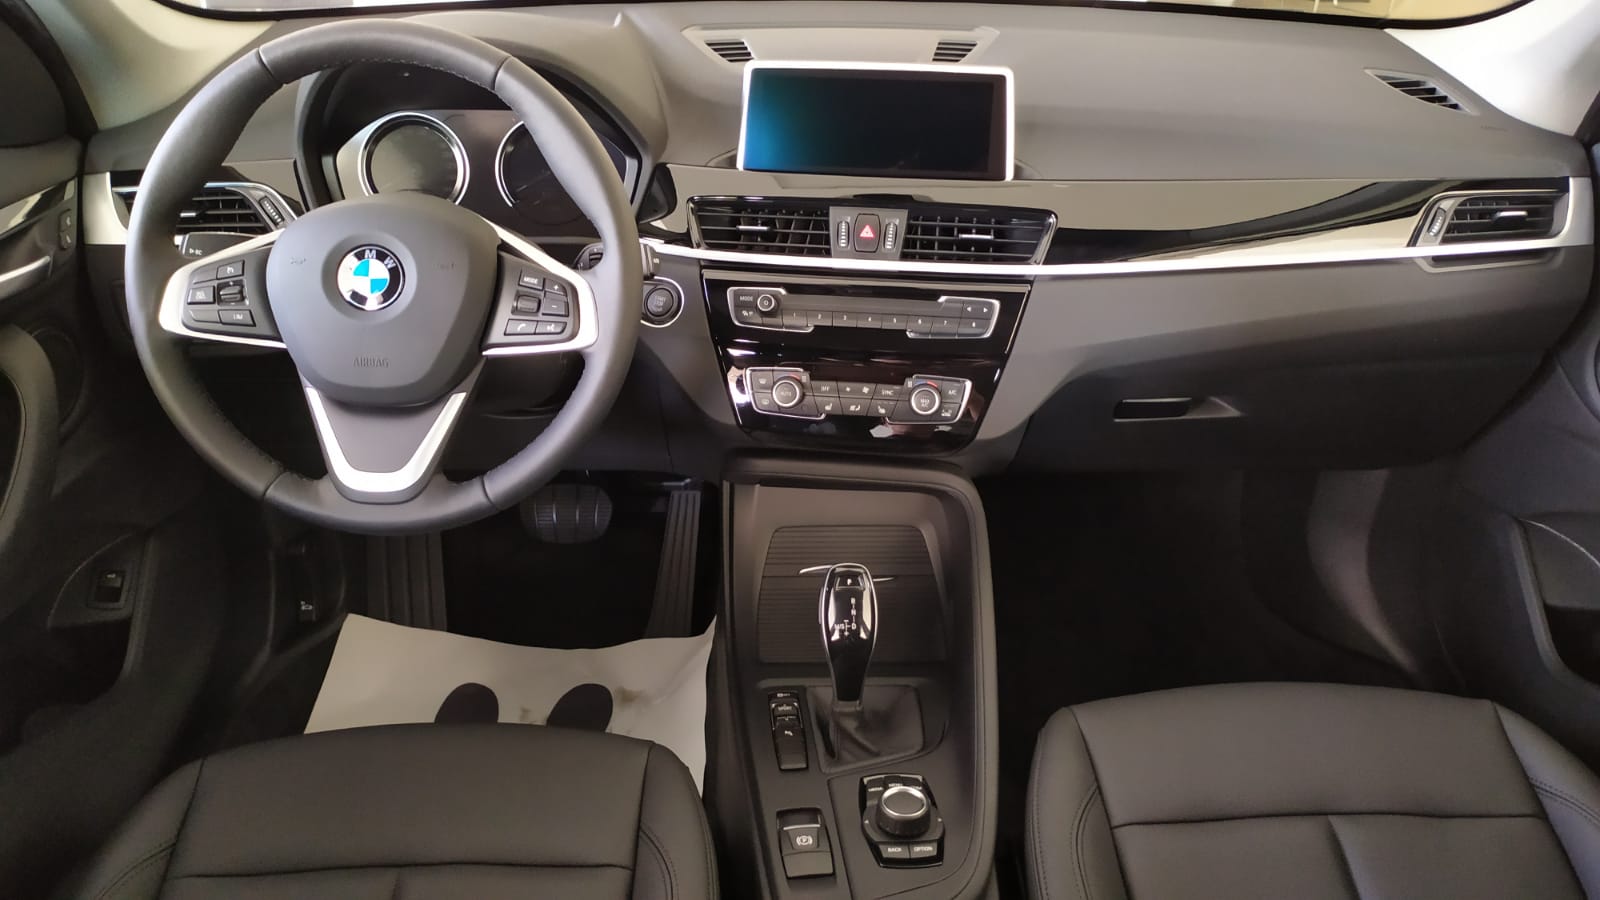 BMW X1 sDrive18i 1.5 140 л.с. 7-Steptronic. SE. Белоснежный. 2021